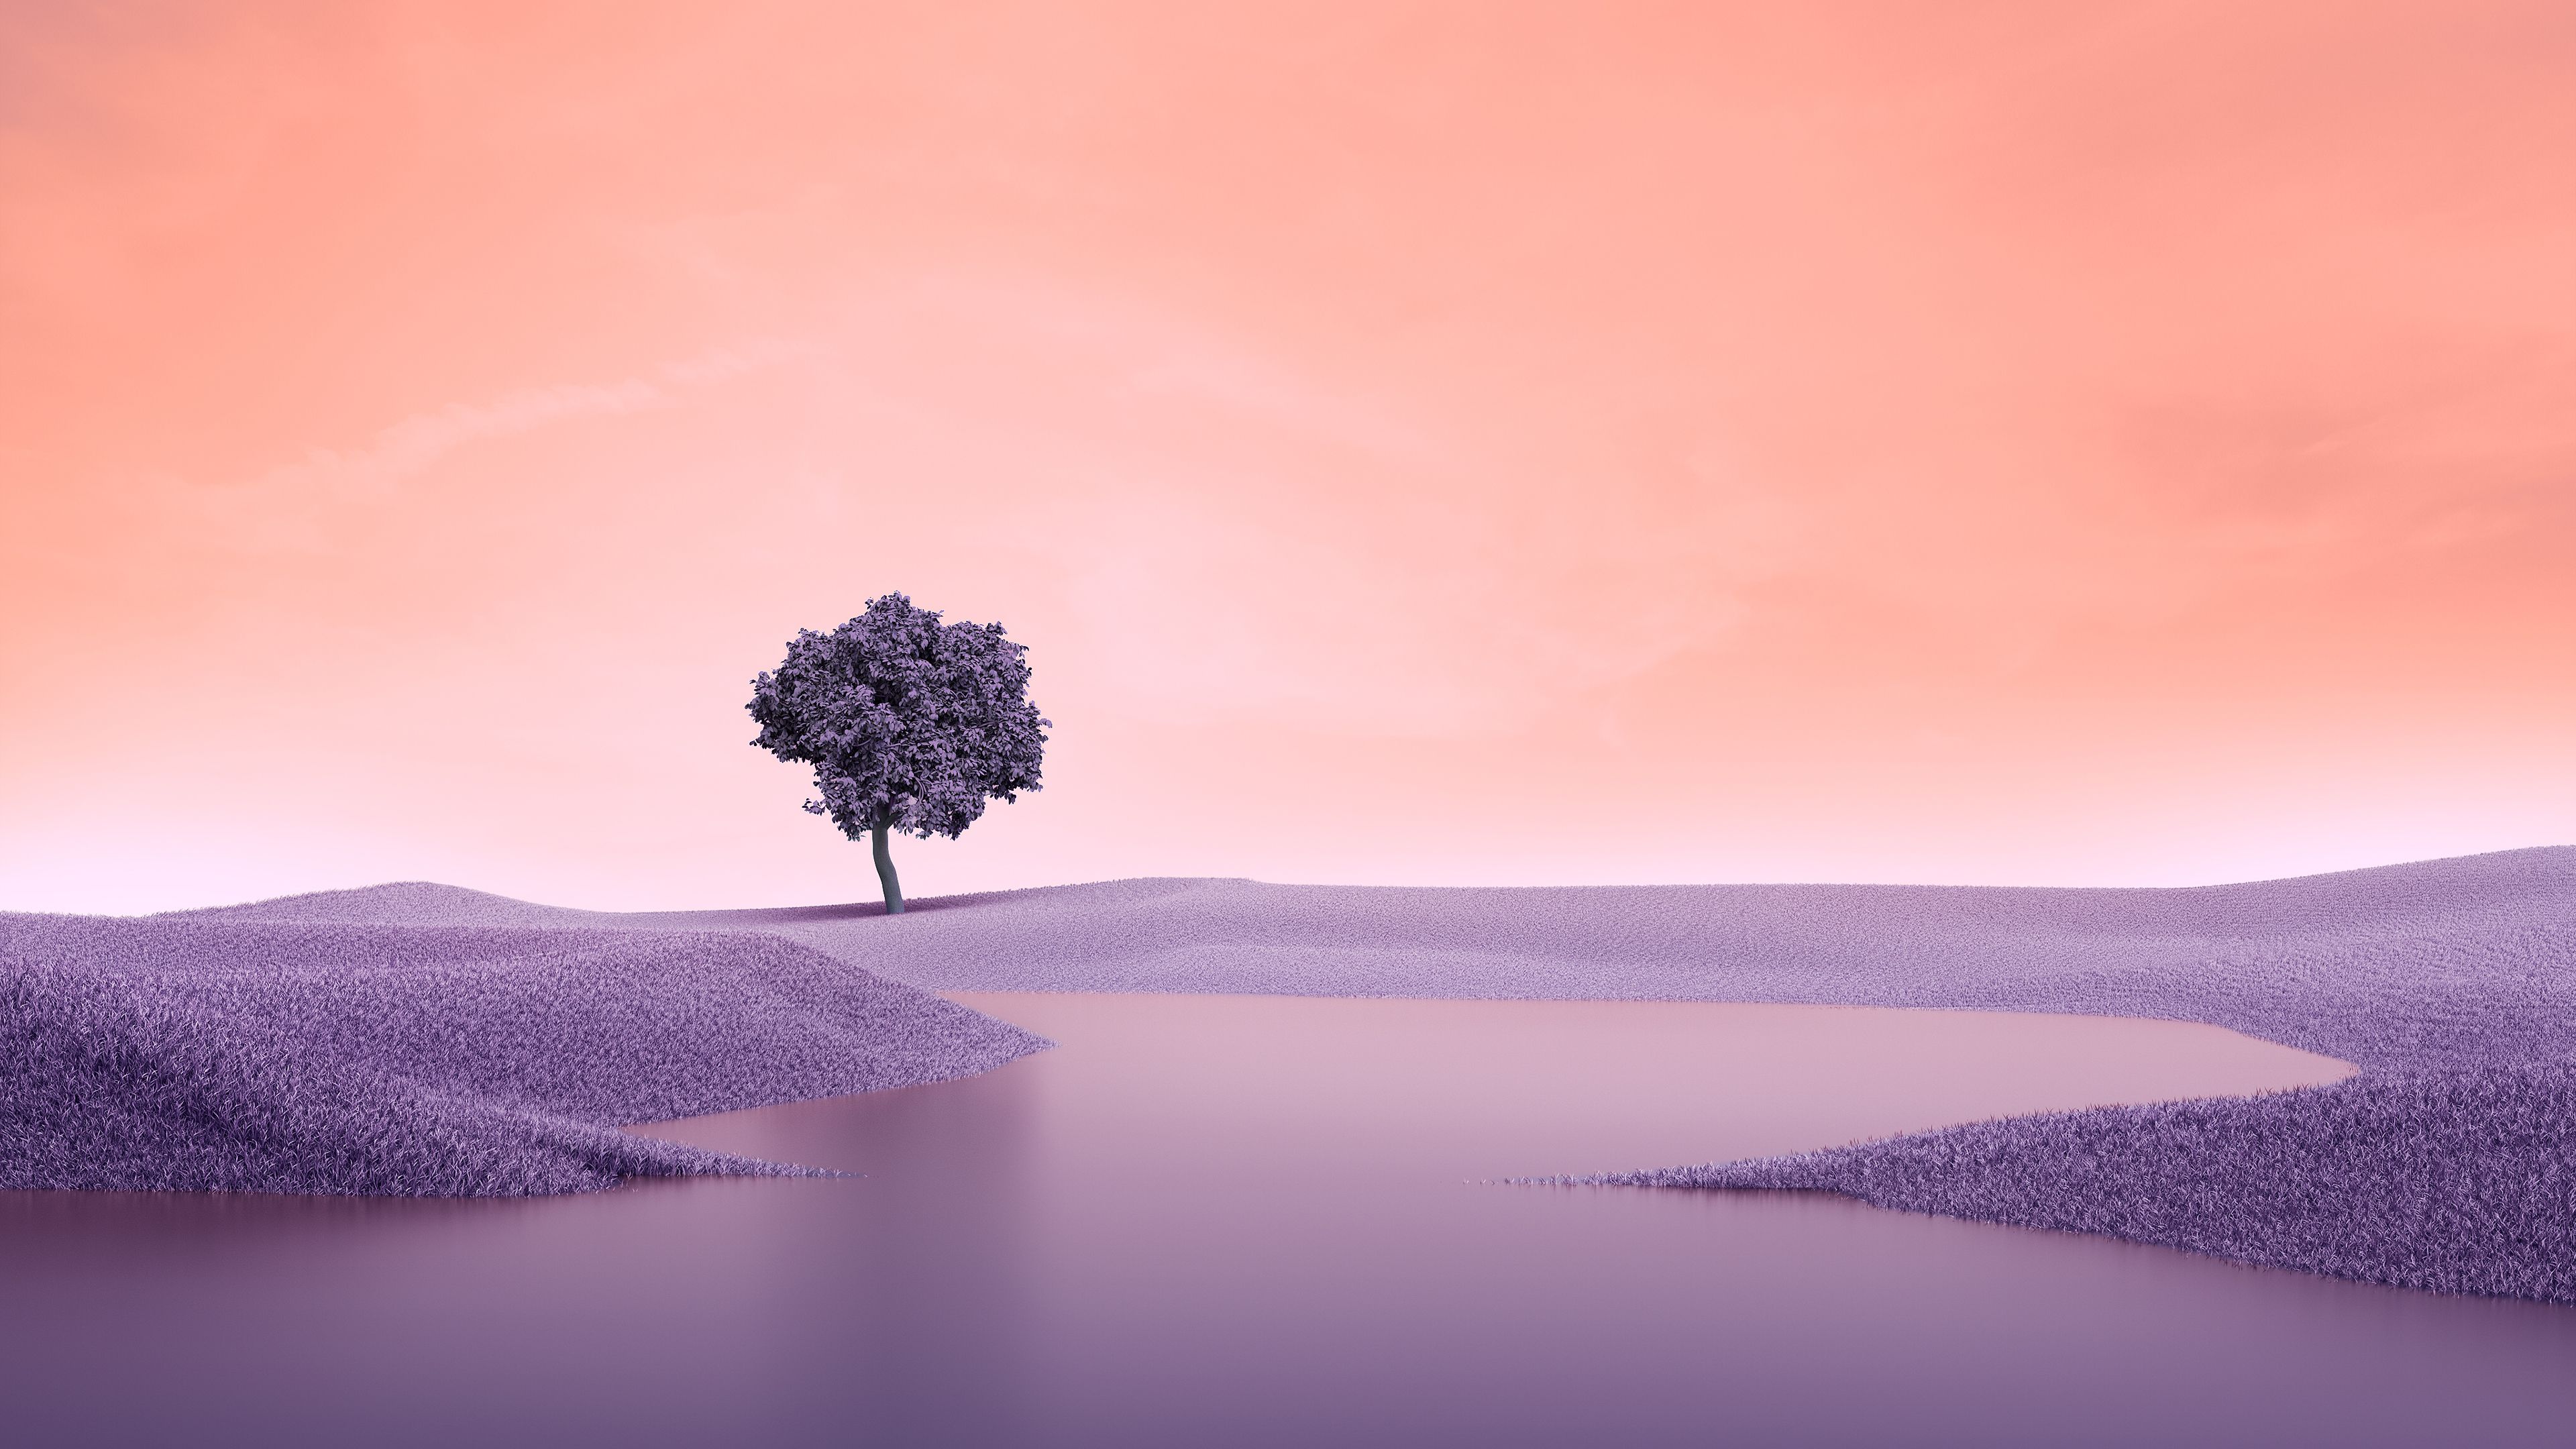 Lone tree, Landscape, Spring, Lake, Surreal, Digital composition, Aesthetic, 4k Free deskk wallpaper, Ultra HD